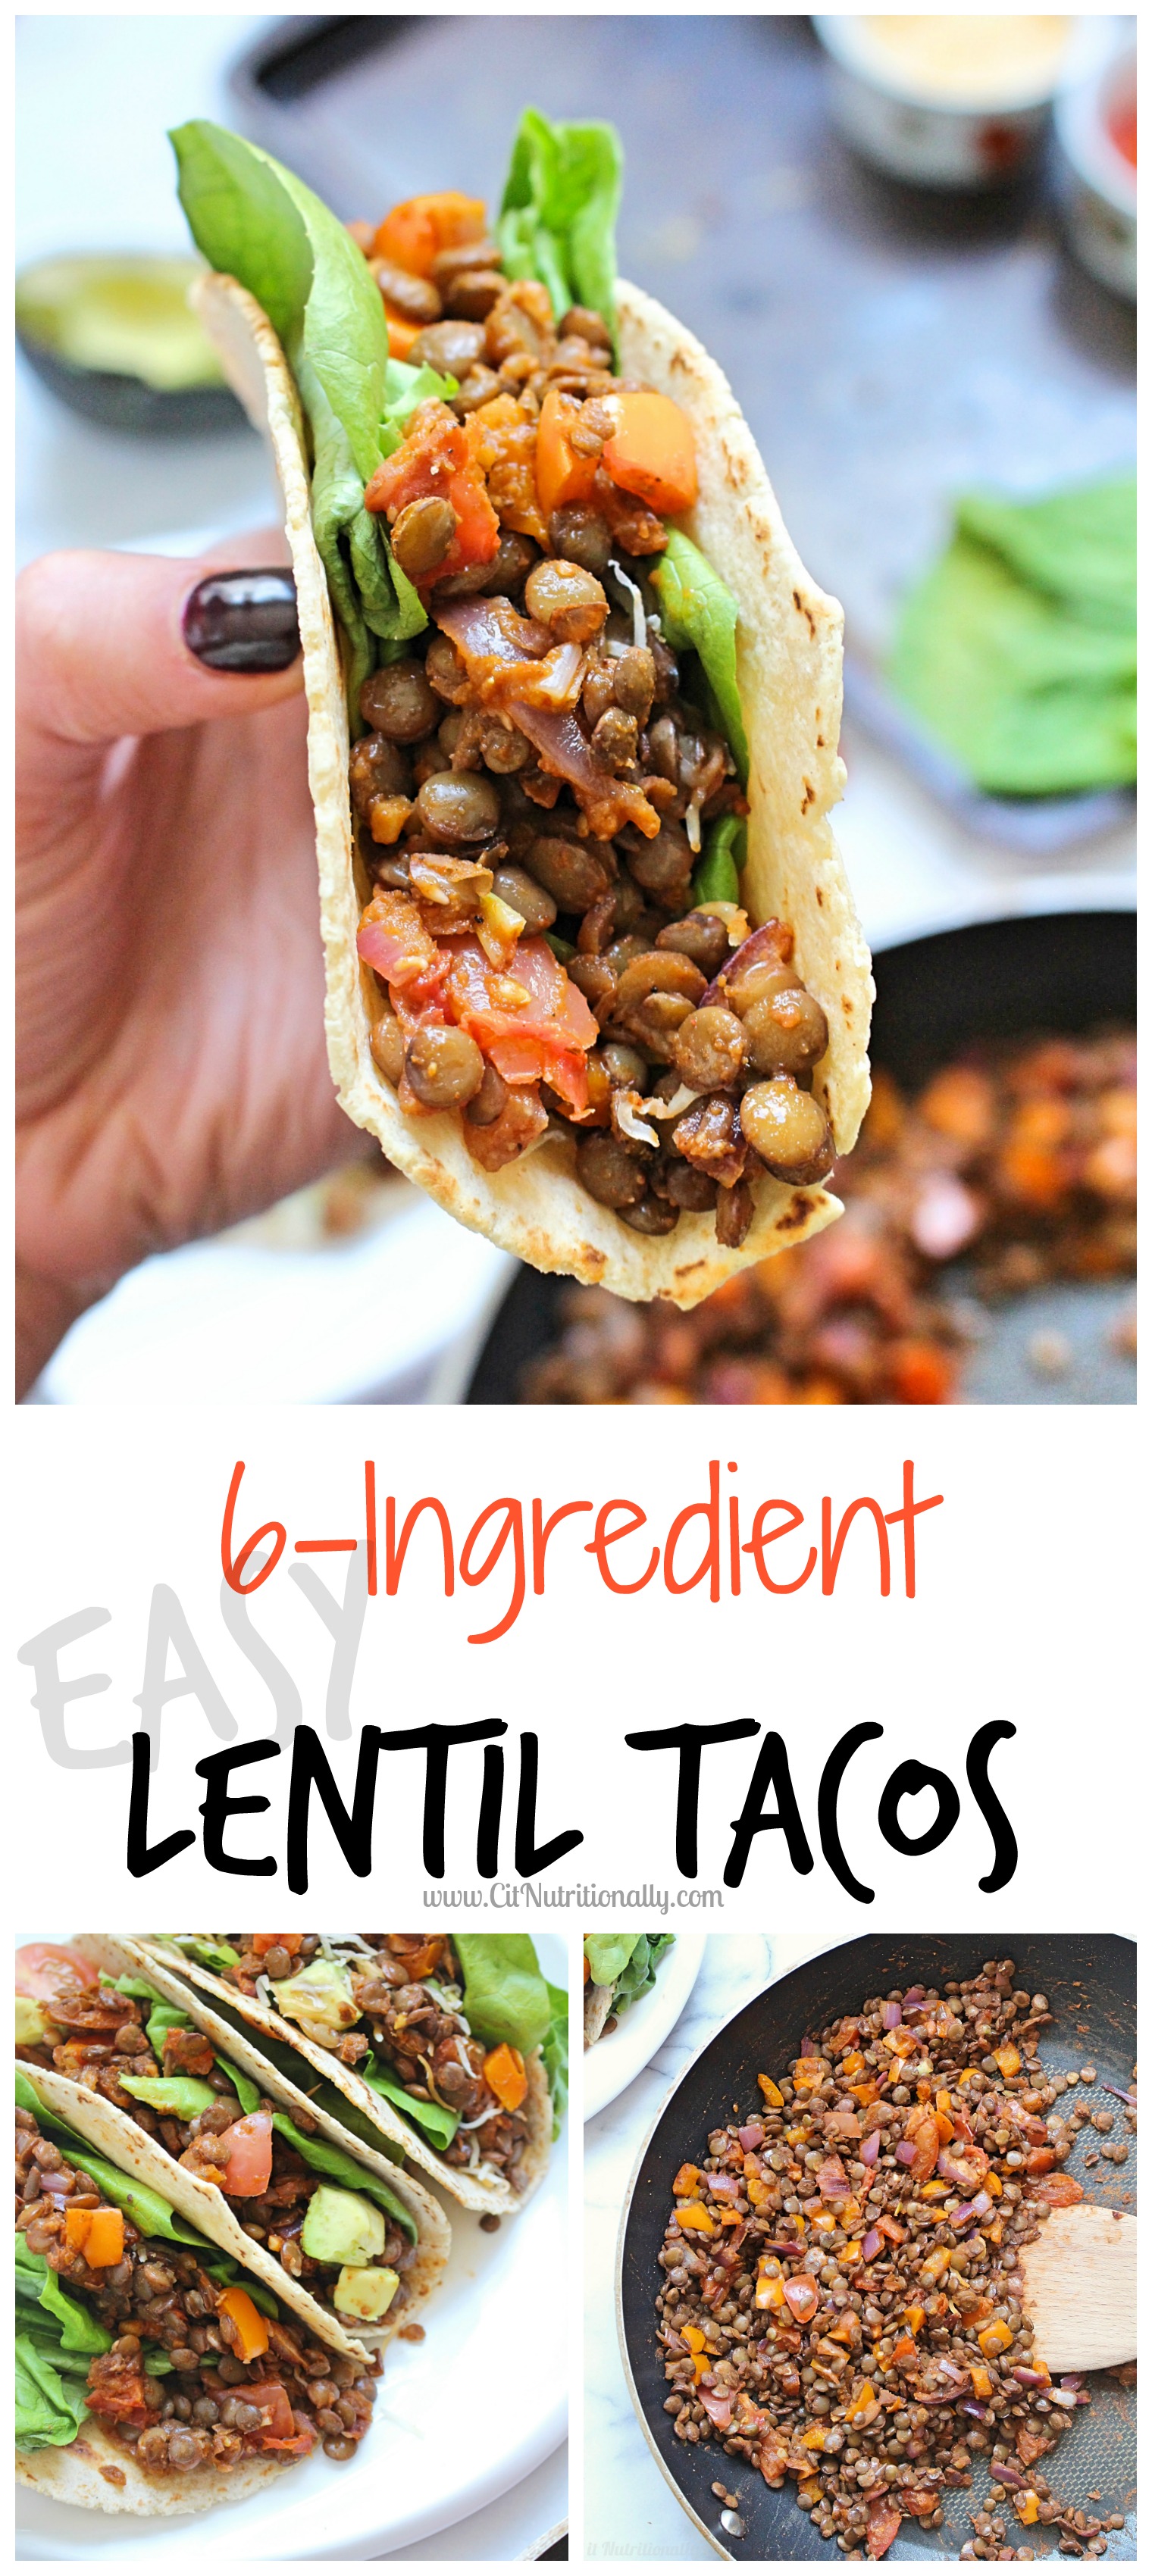 6-Ingredient Easy Lentil Tacos | C it Nutritionally - Chelsey Amer